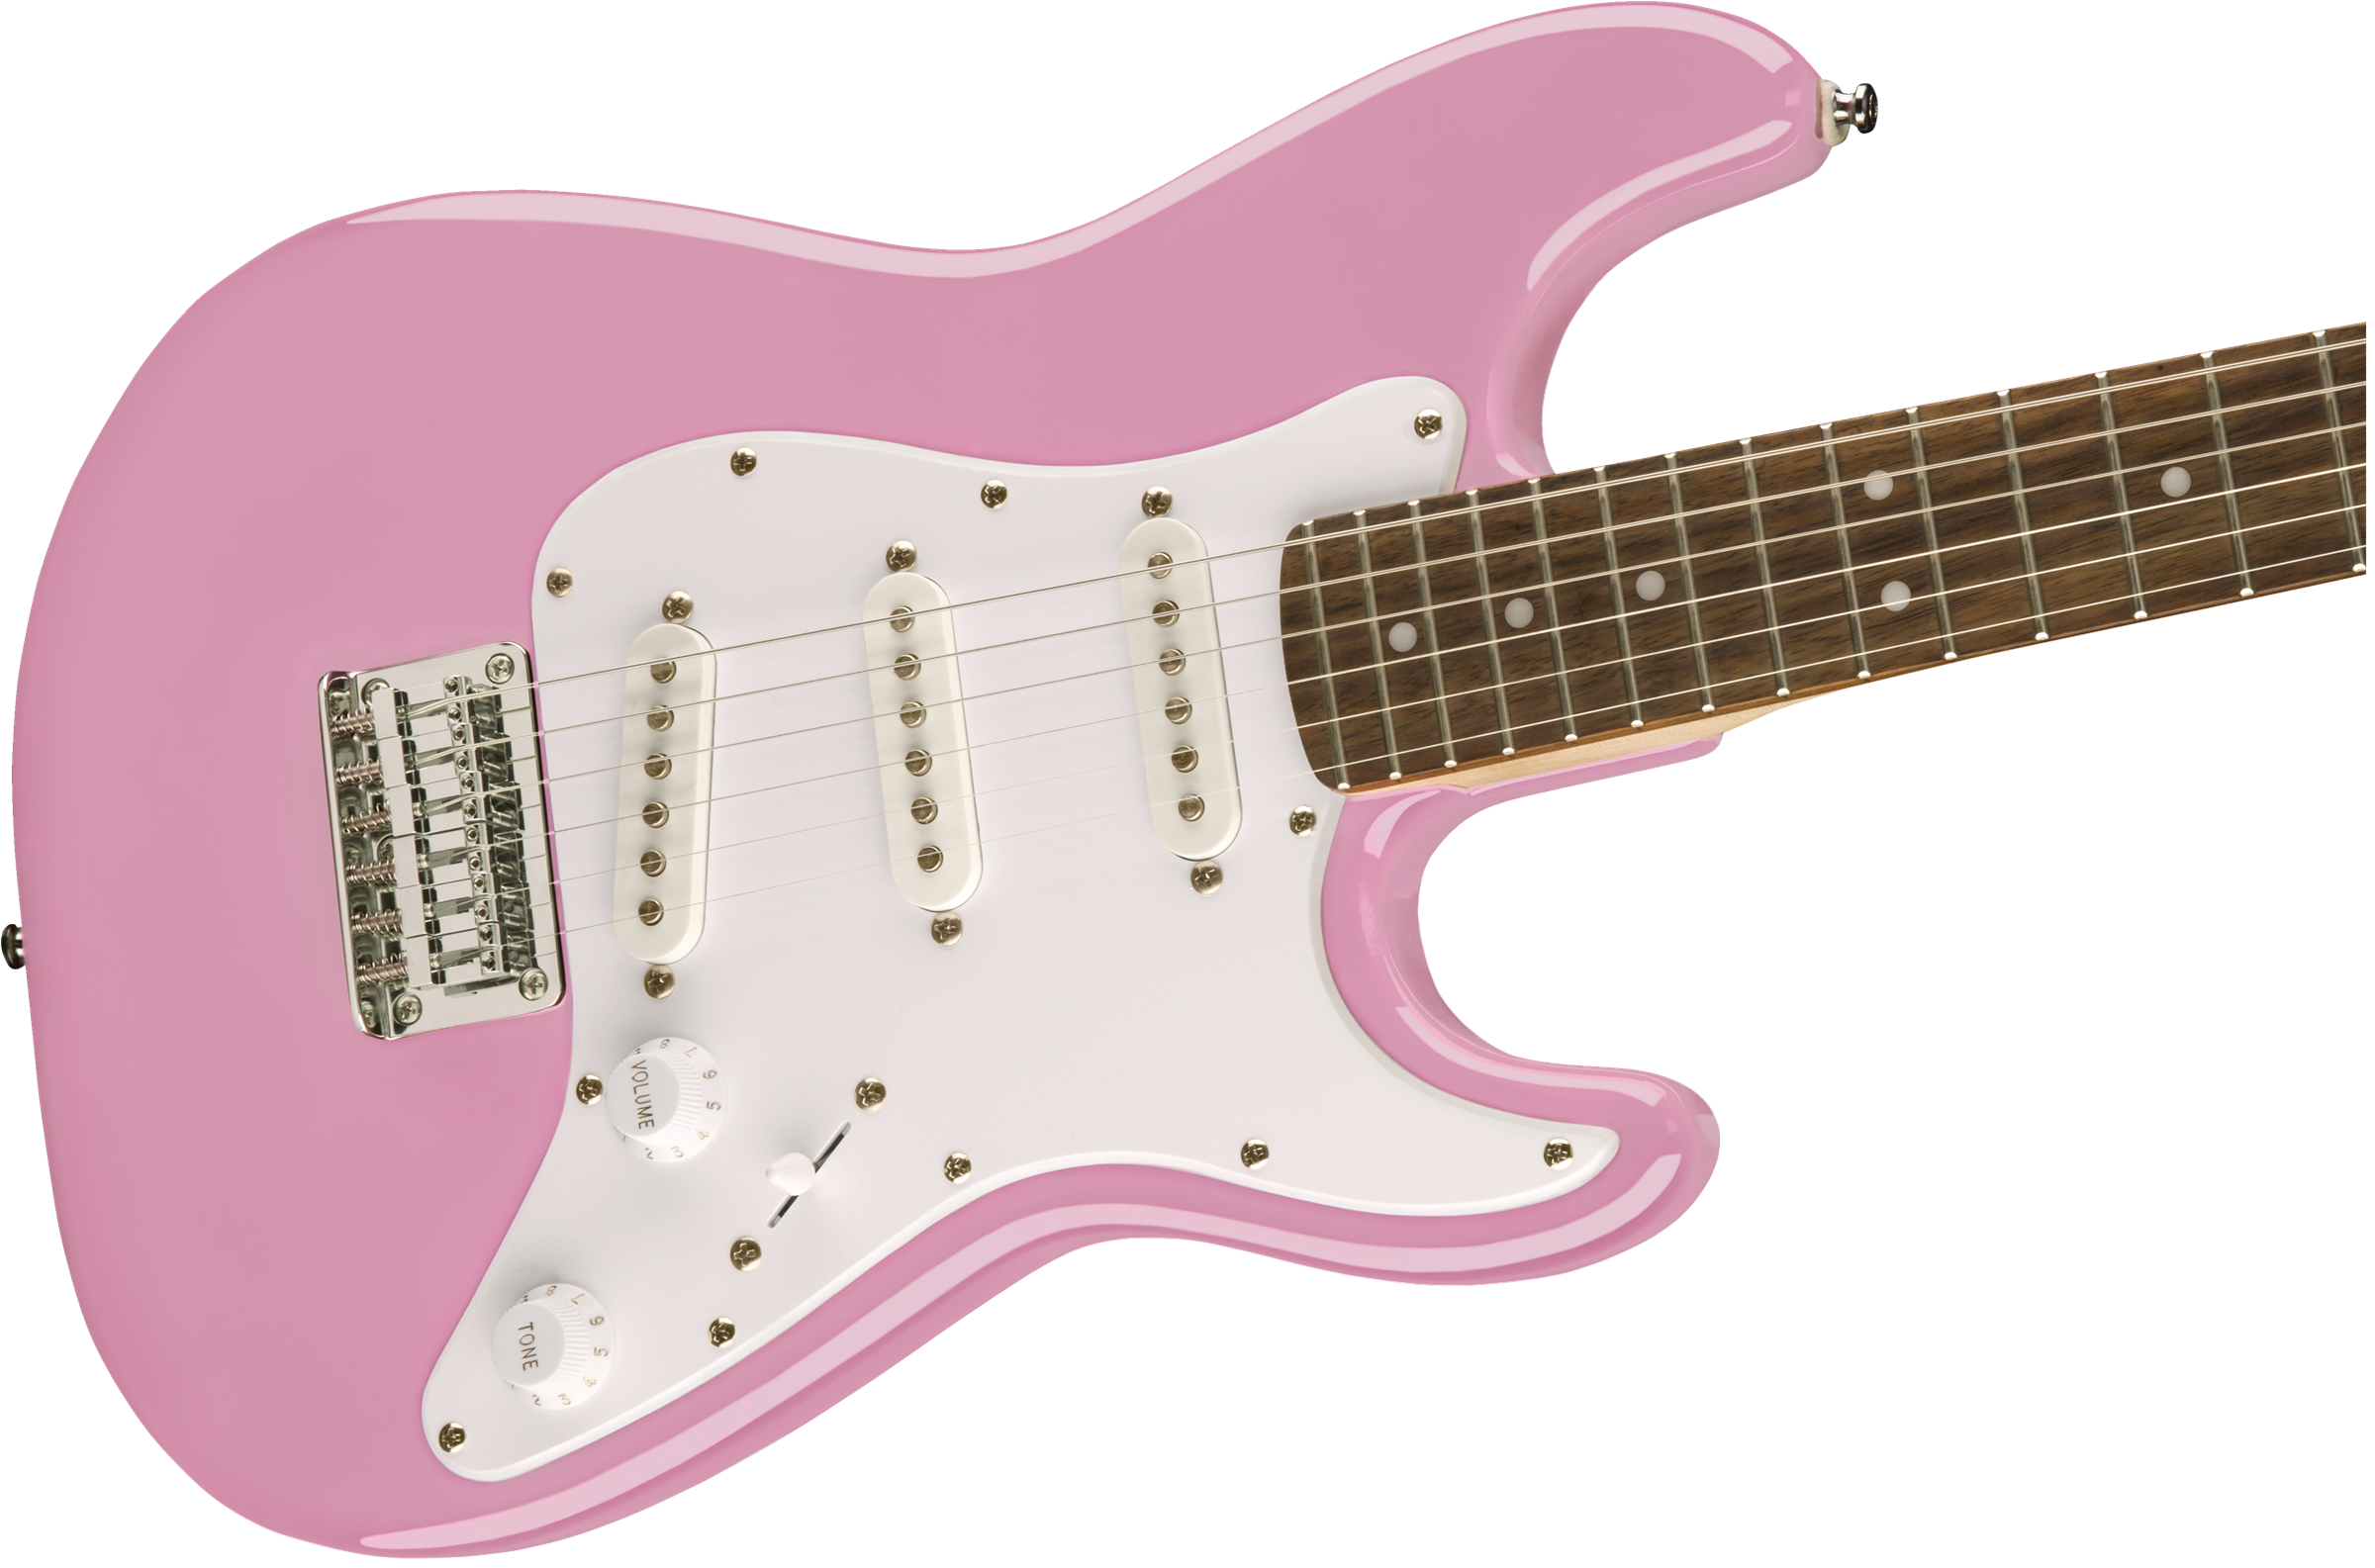 Squier Squier Mini Strat V2 Ht Sss Lau - Pink - Electric guitar for kids - Variation 2